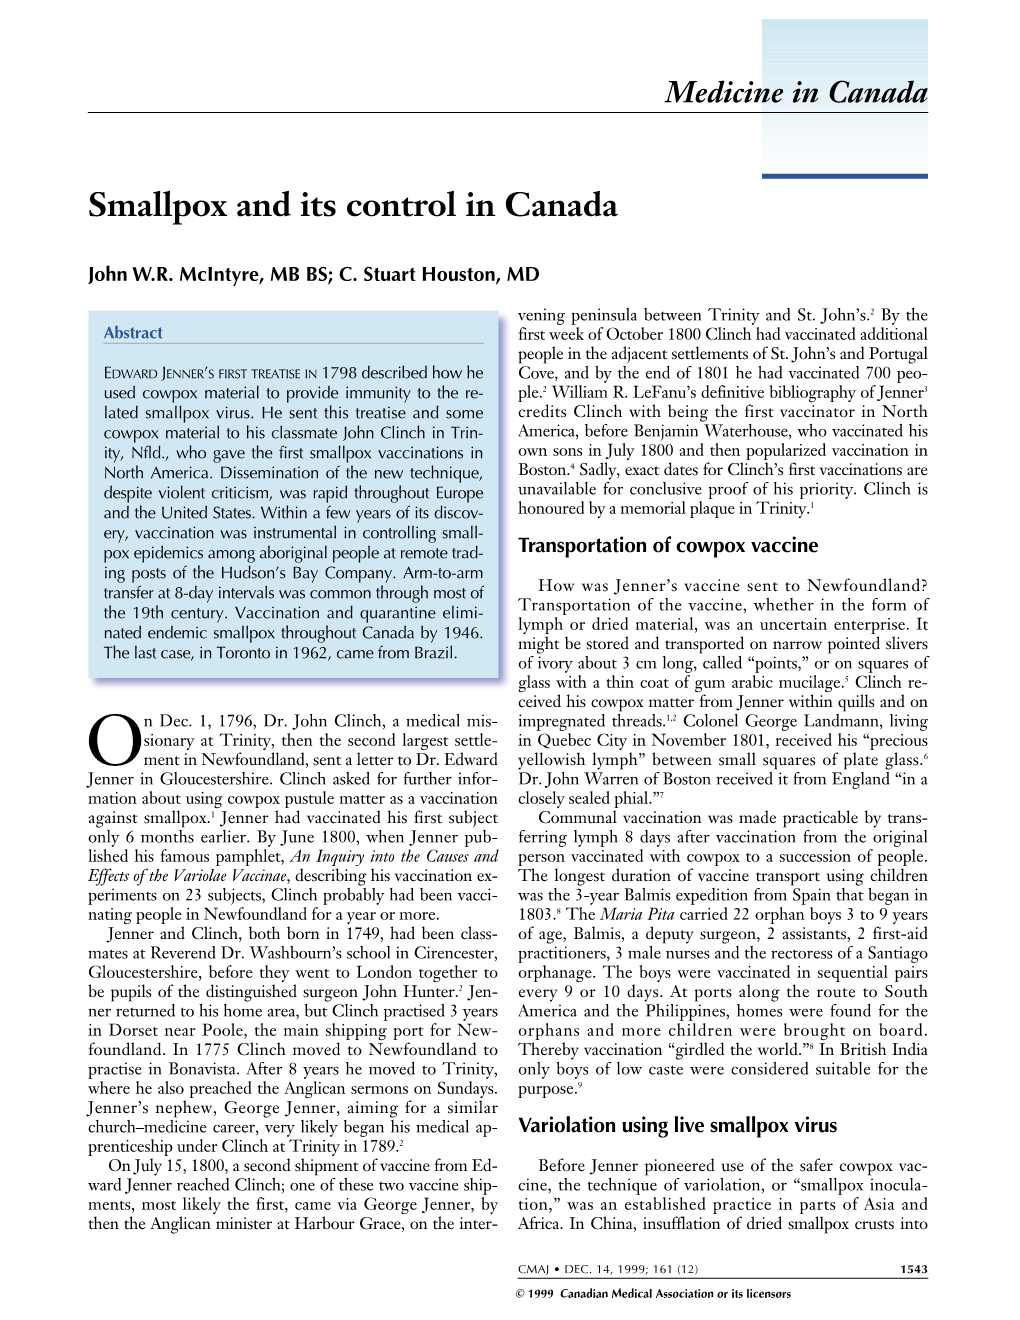 Smallpox and Its Control in Canada